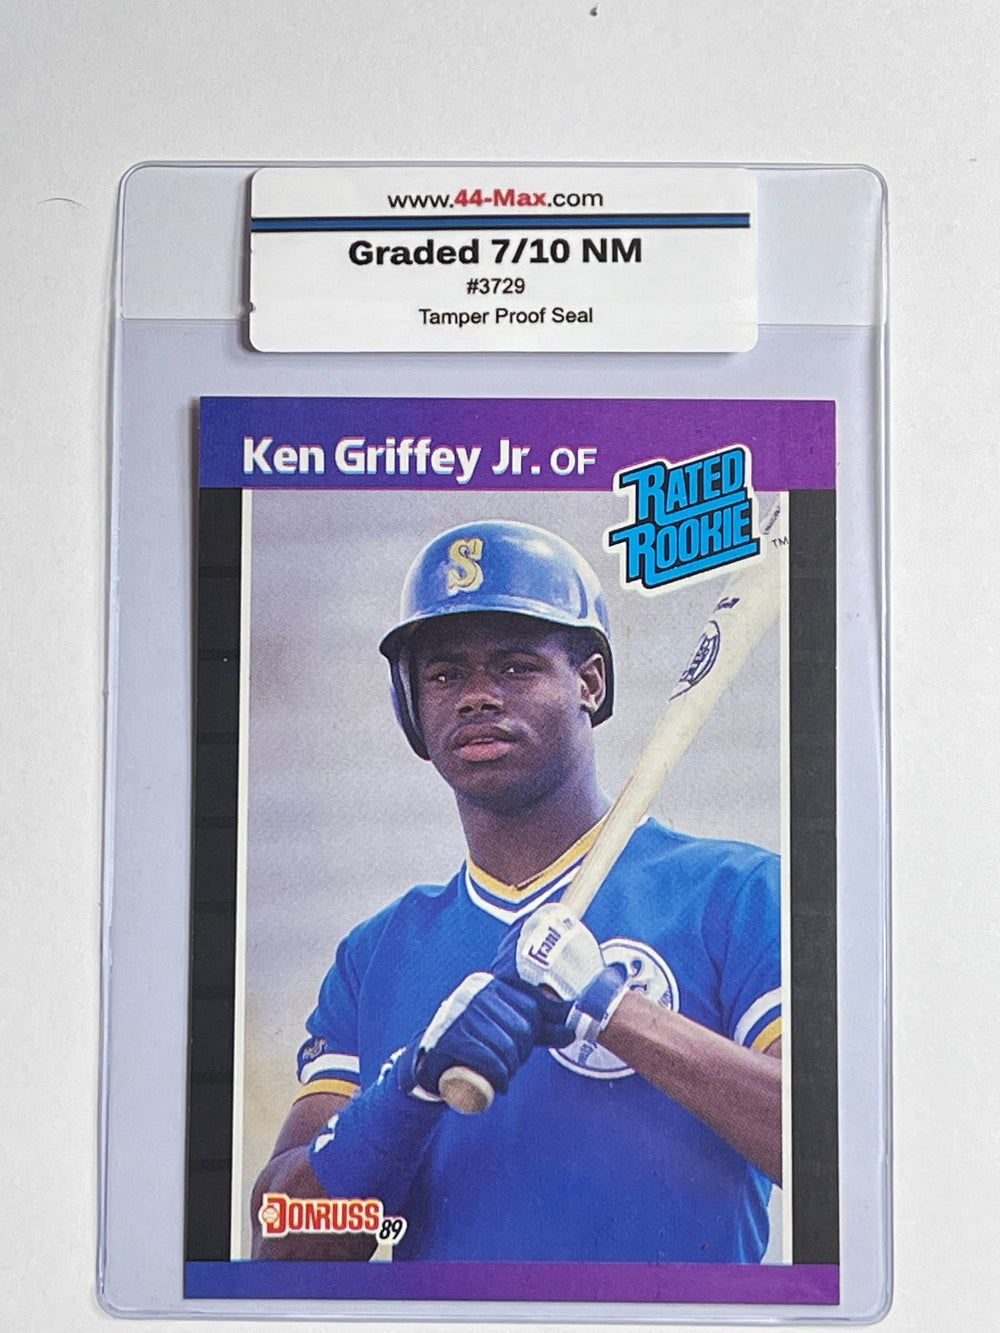 Ken Griffey Jr 1991 Donruss Mariners #33 Card. 44-Max 7/10 NM #3729